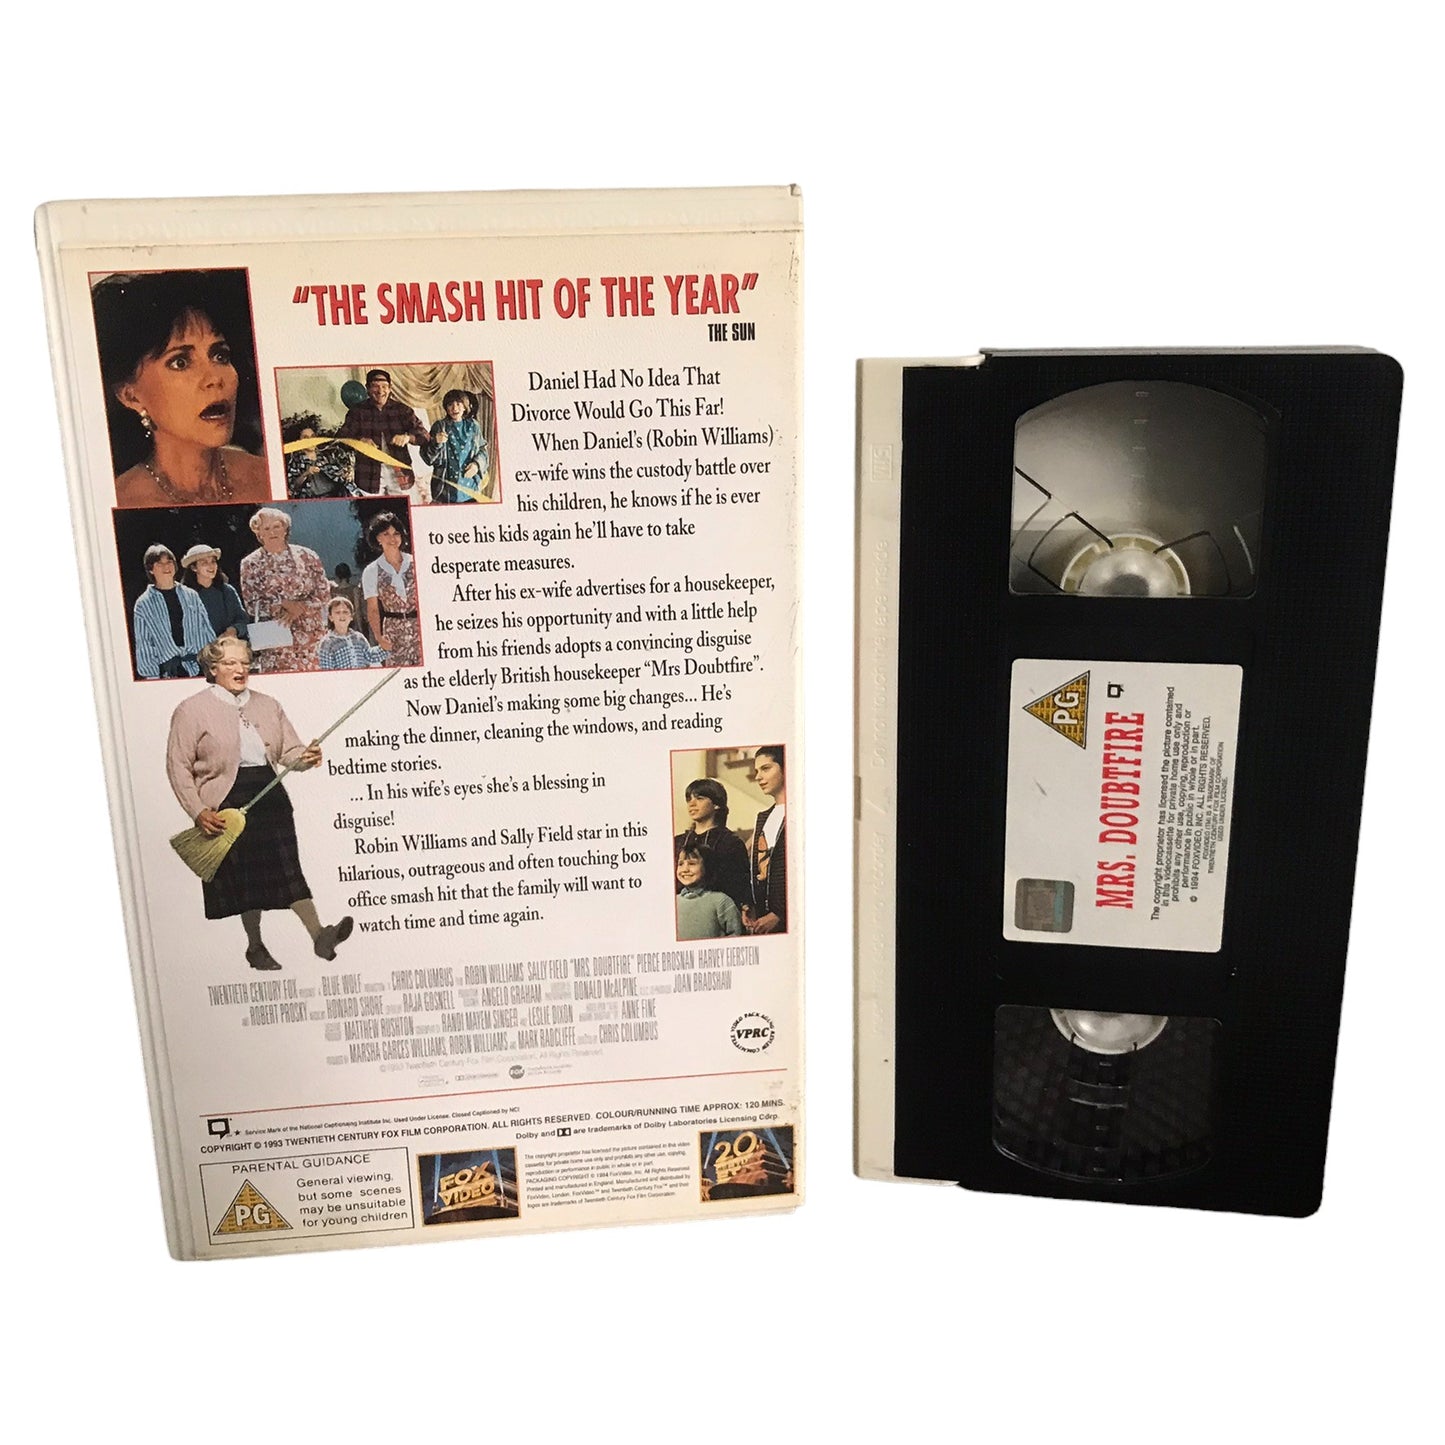 Mrs. Doubtfire - Robin Williams - FOX Video - Large Box - Pal - VHS-